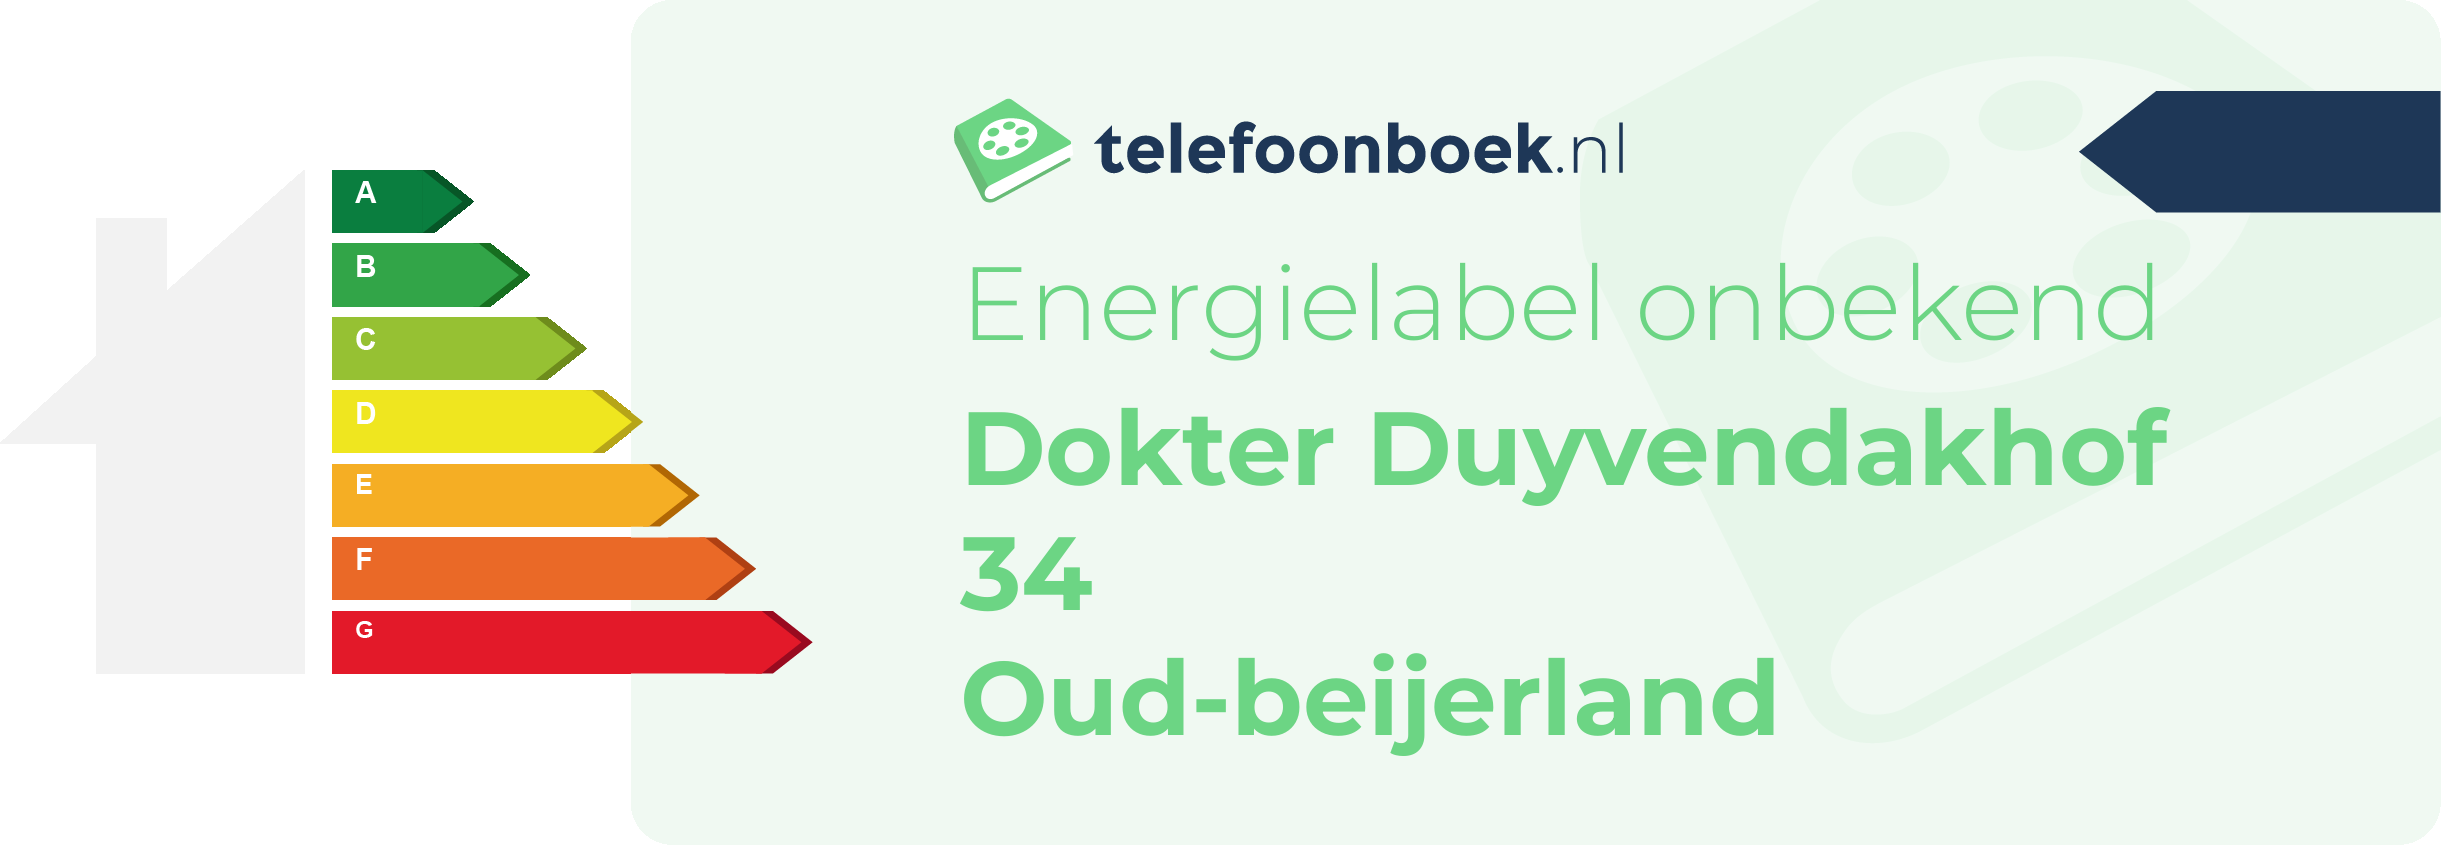 Energielabel Dokter Duyvendakhof 34 Oud-Beijerland